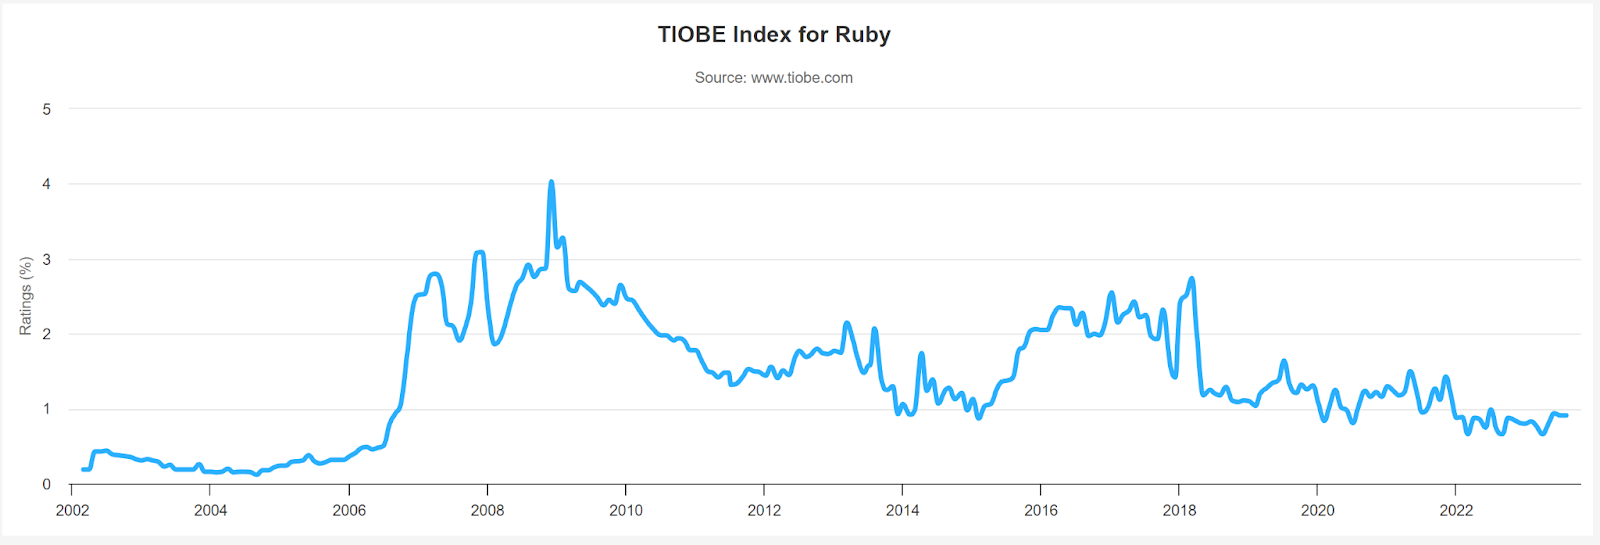 TIOBE Index